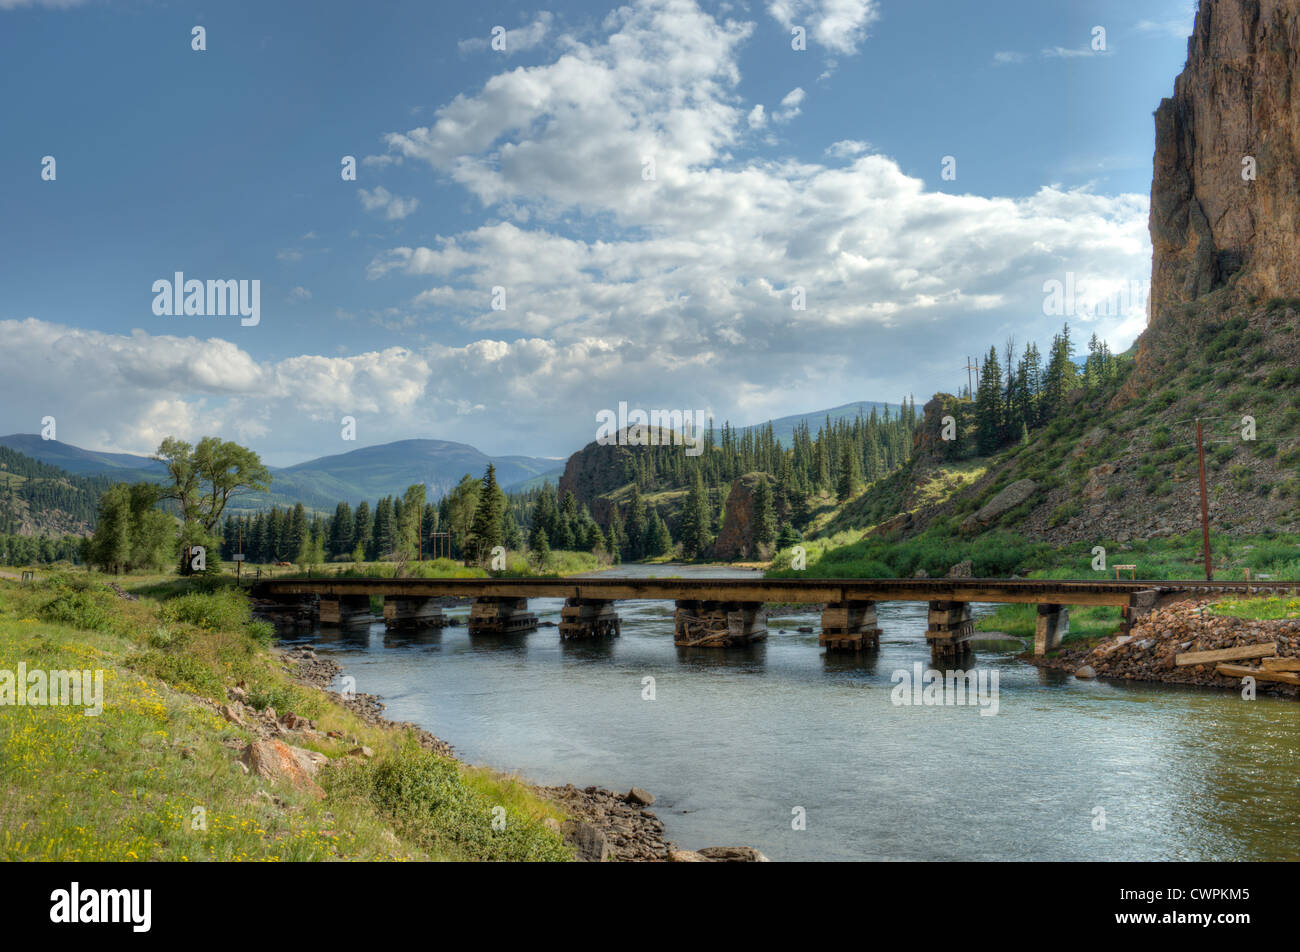 The old Denver & Rio Grande Western railroad bridge across the Rio Grande at Wagon Wheel Gap. Stock Photo